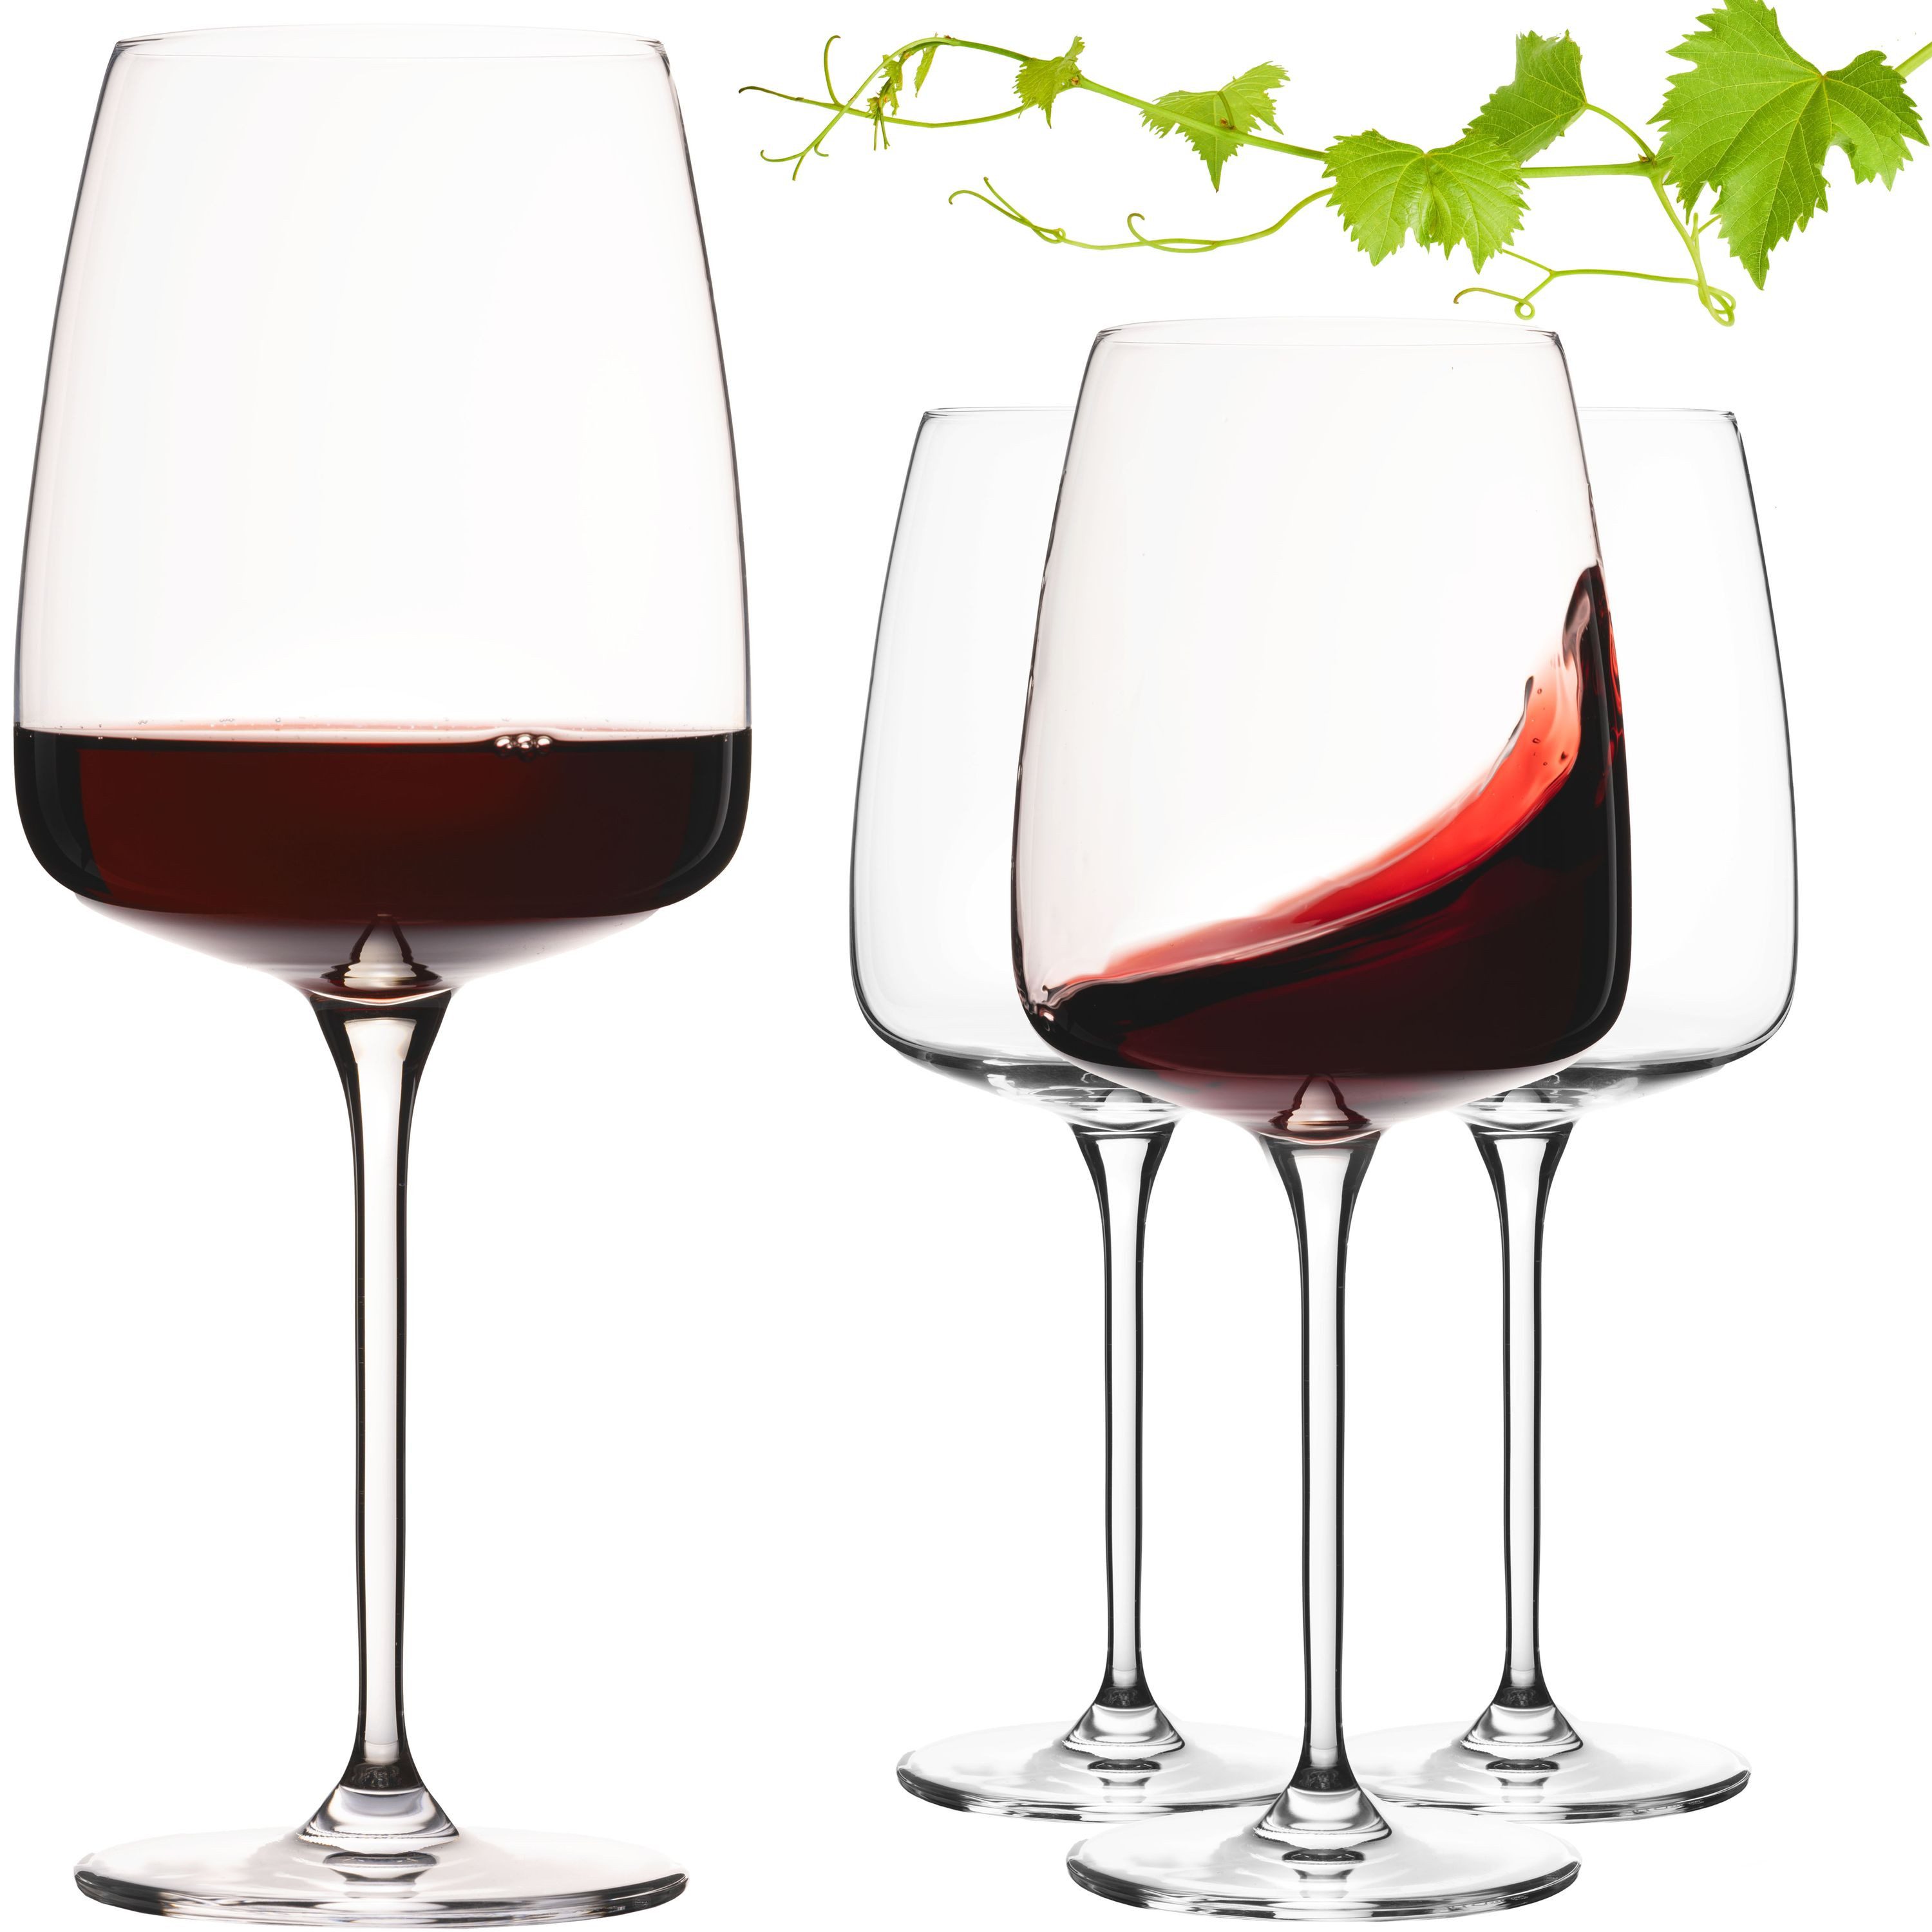 IMPERIAL glass Weinglas Große eckige Rotweingläser 600ml Set 4-Teilig "Milano", Crystalline Glas, Burgundergläser aus Crystalline Glas Spülmaschinenfest